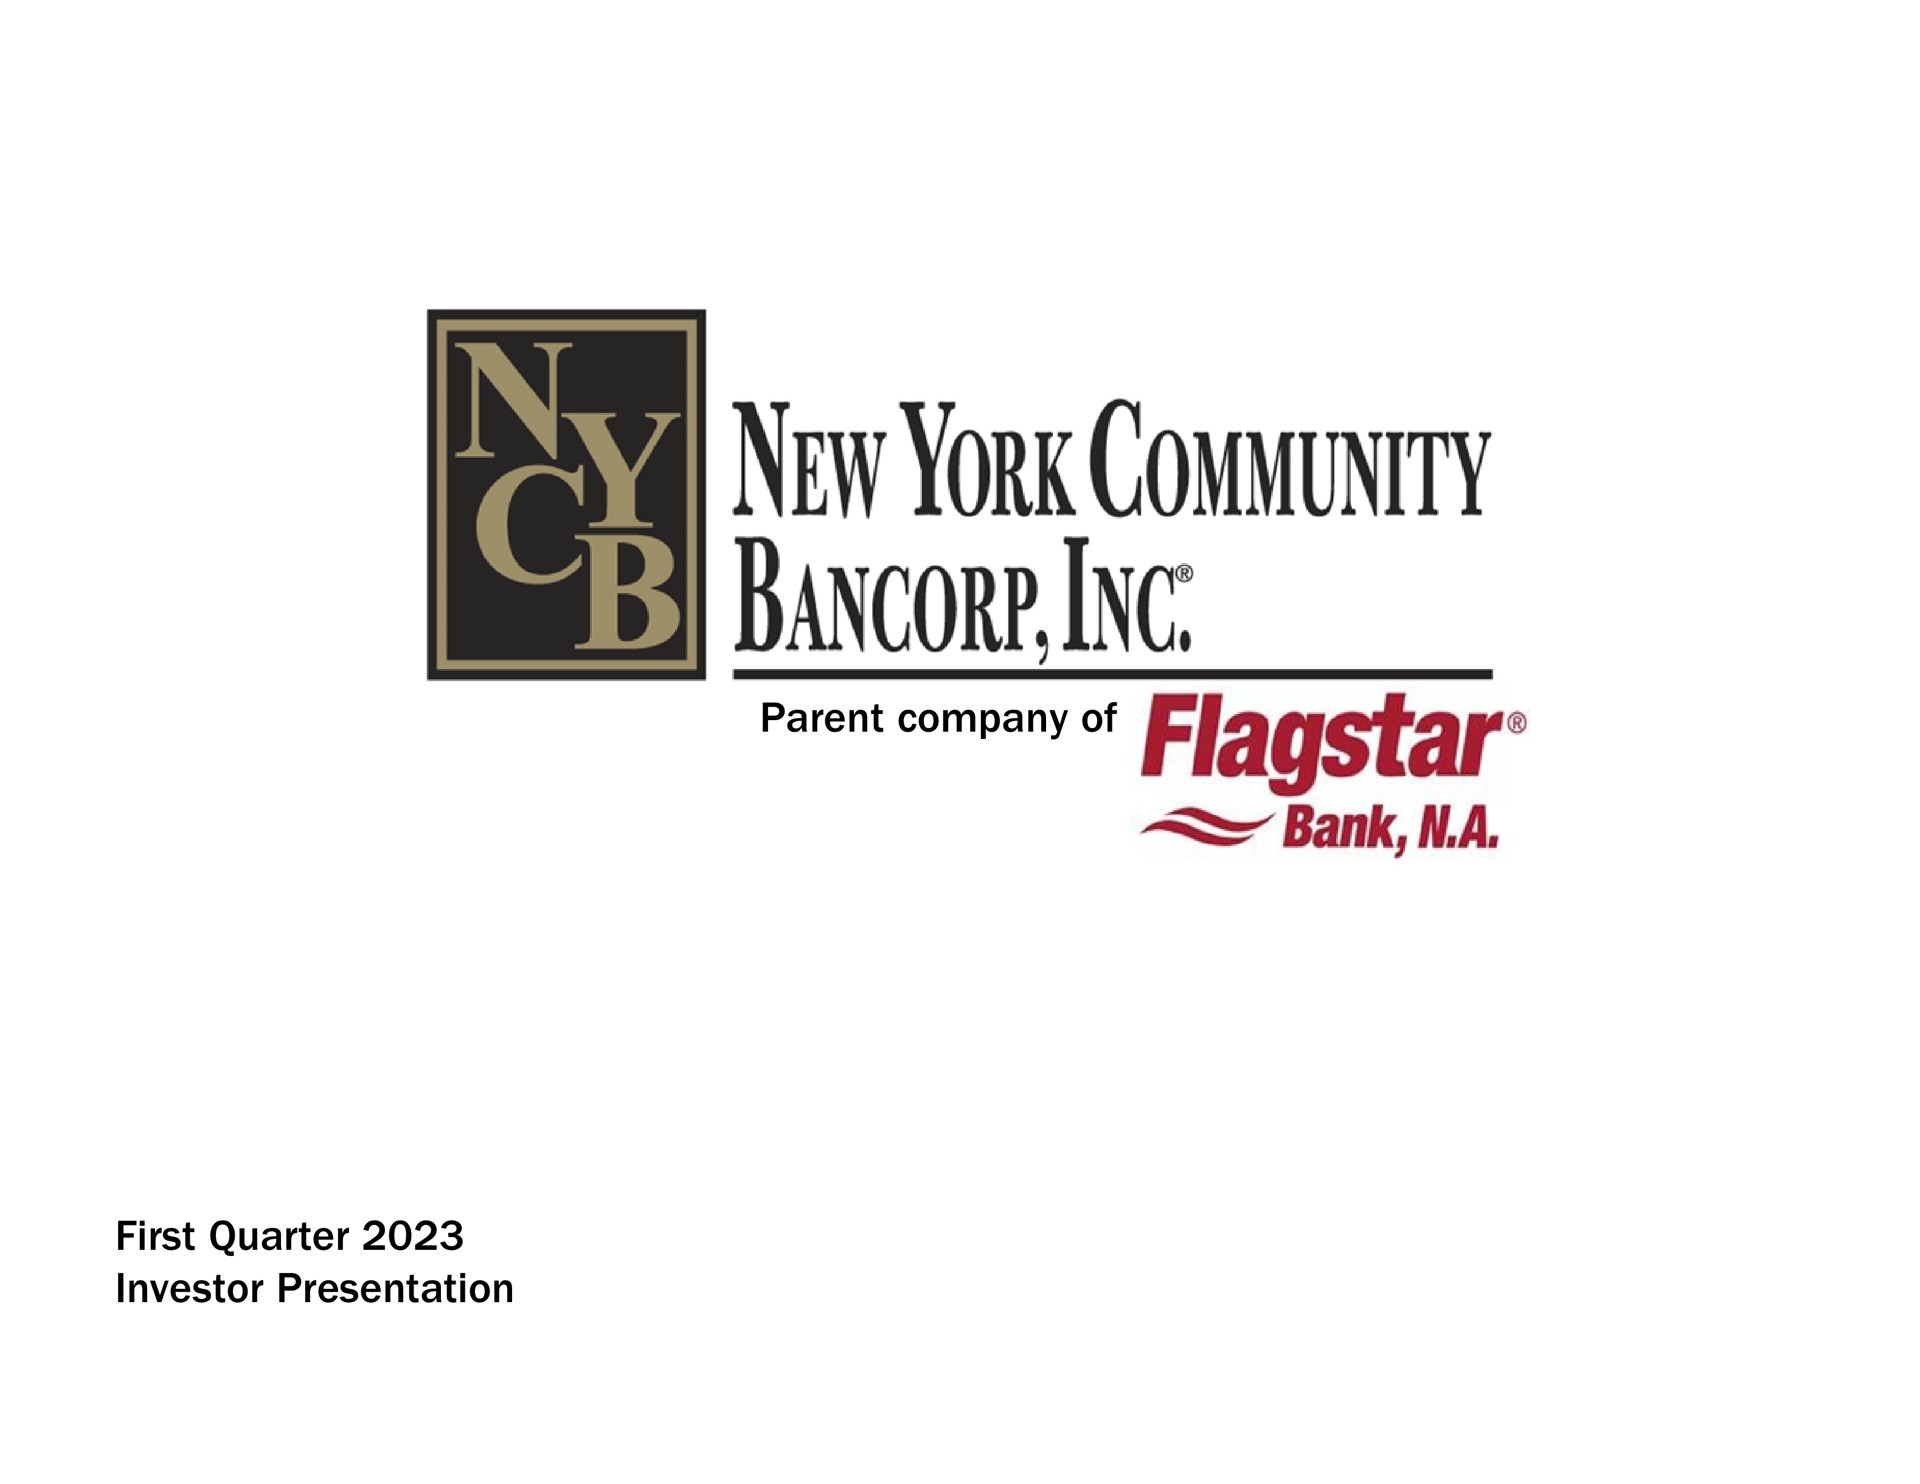 parent company of first quarter investor presentation new york community bank a | New York Community Bancorp